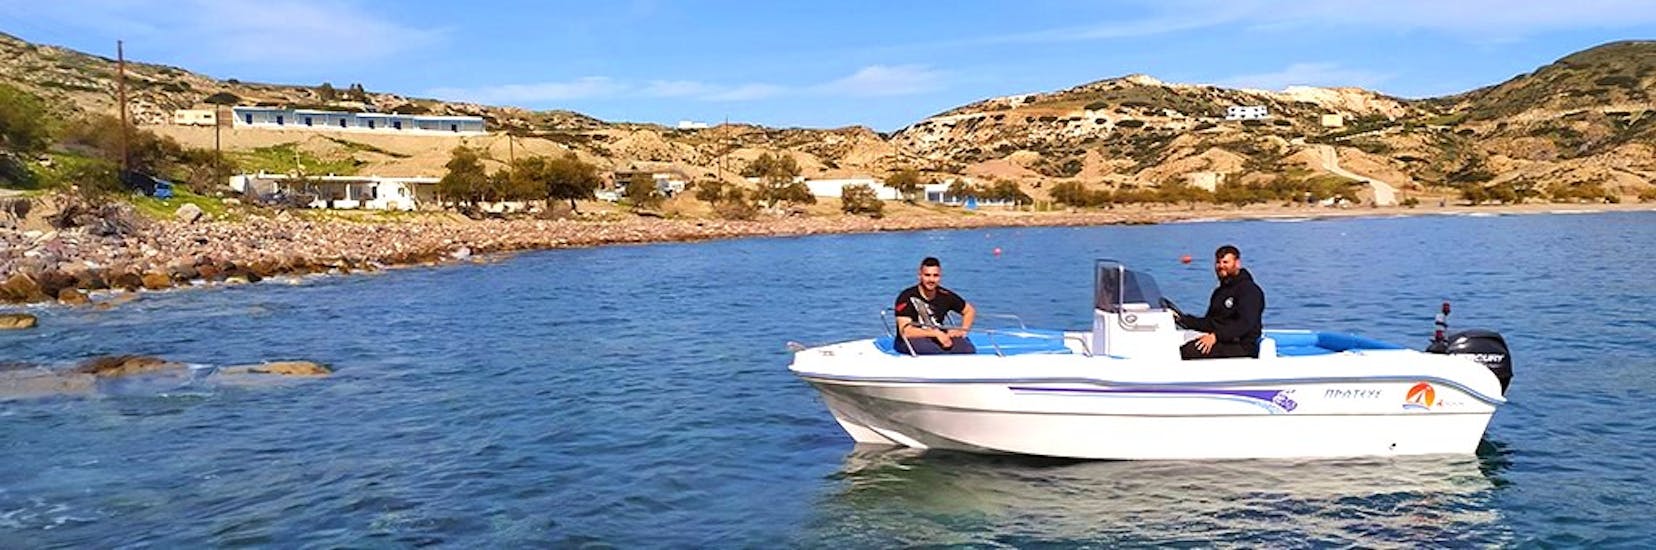 Boat Rental from Agia Kiriaki around Milos (up to 6 people).